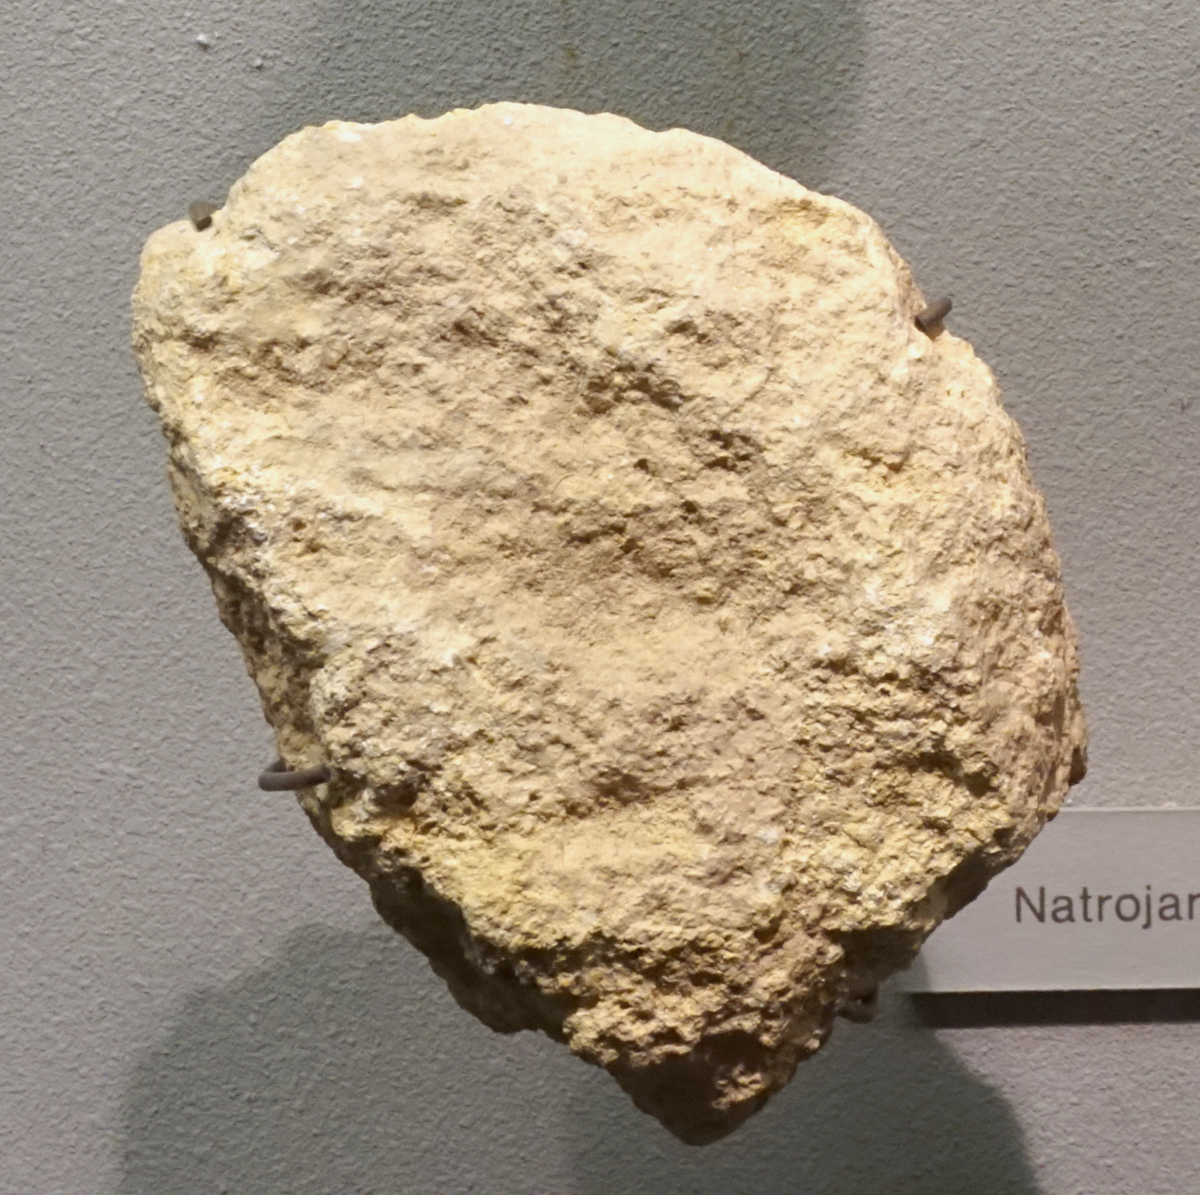 Massive Natrojarosite from Boolcoomata, Australia